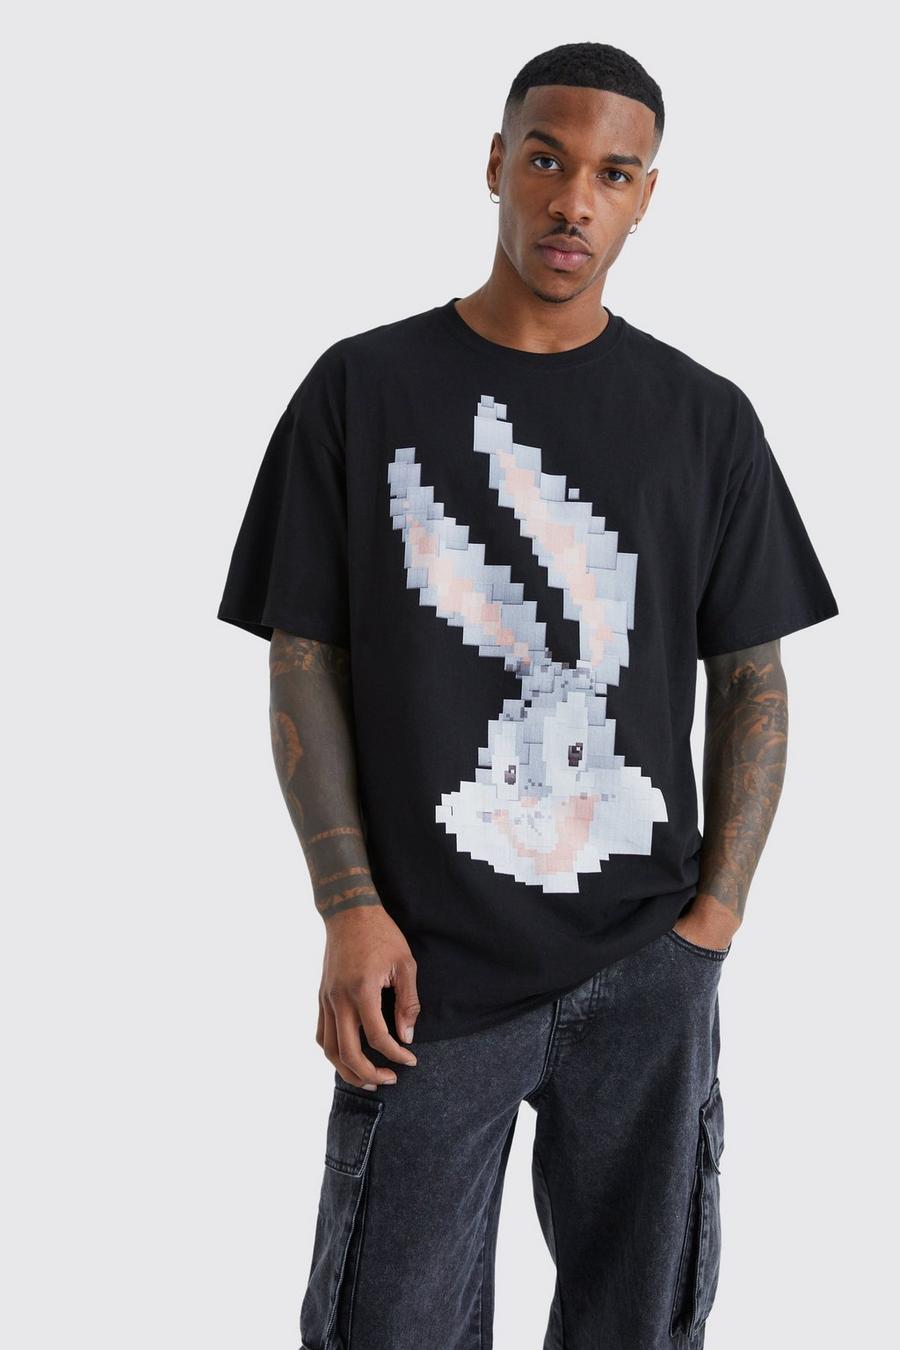 Black svart Oversized Pixel Bugs Bunny License T-shirt